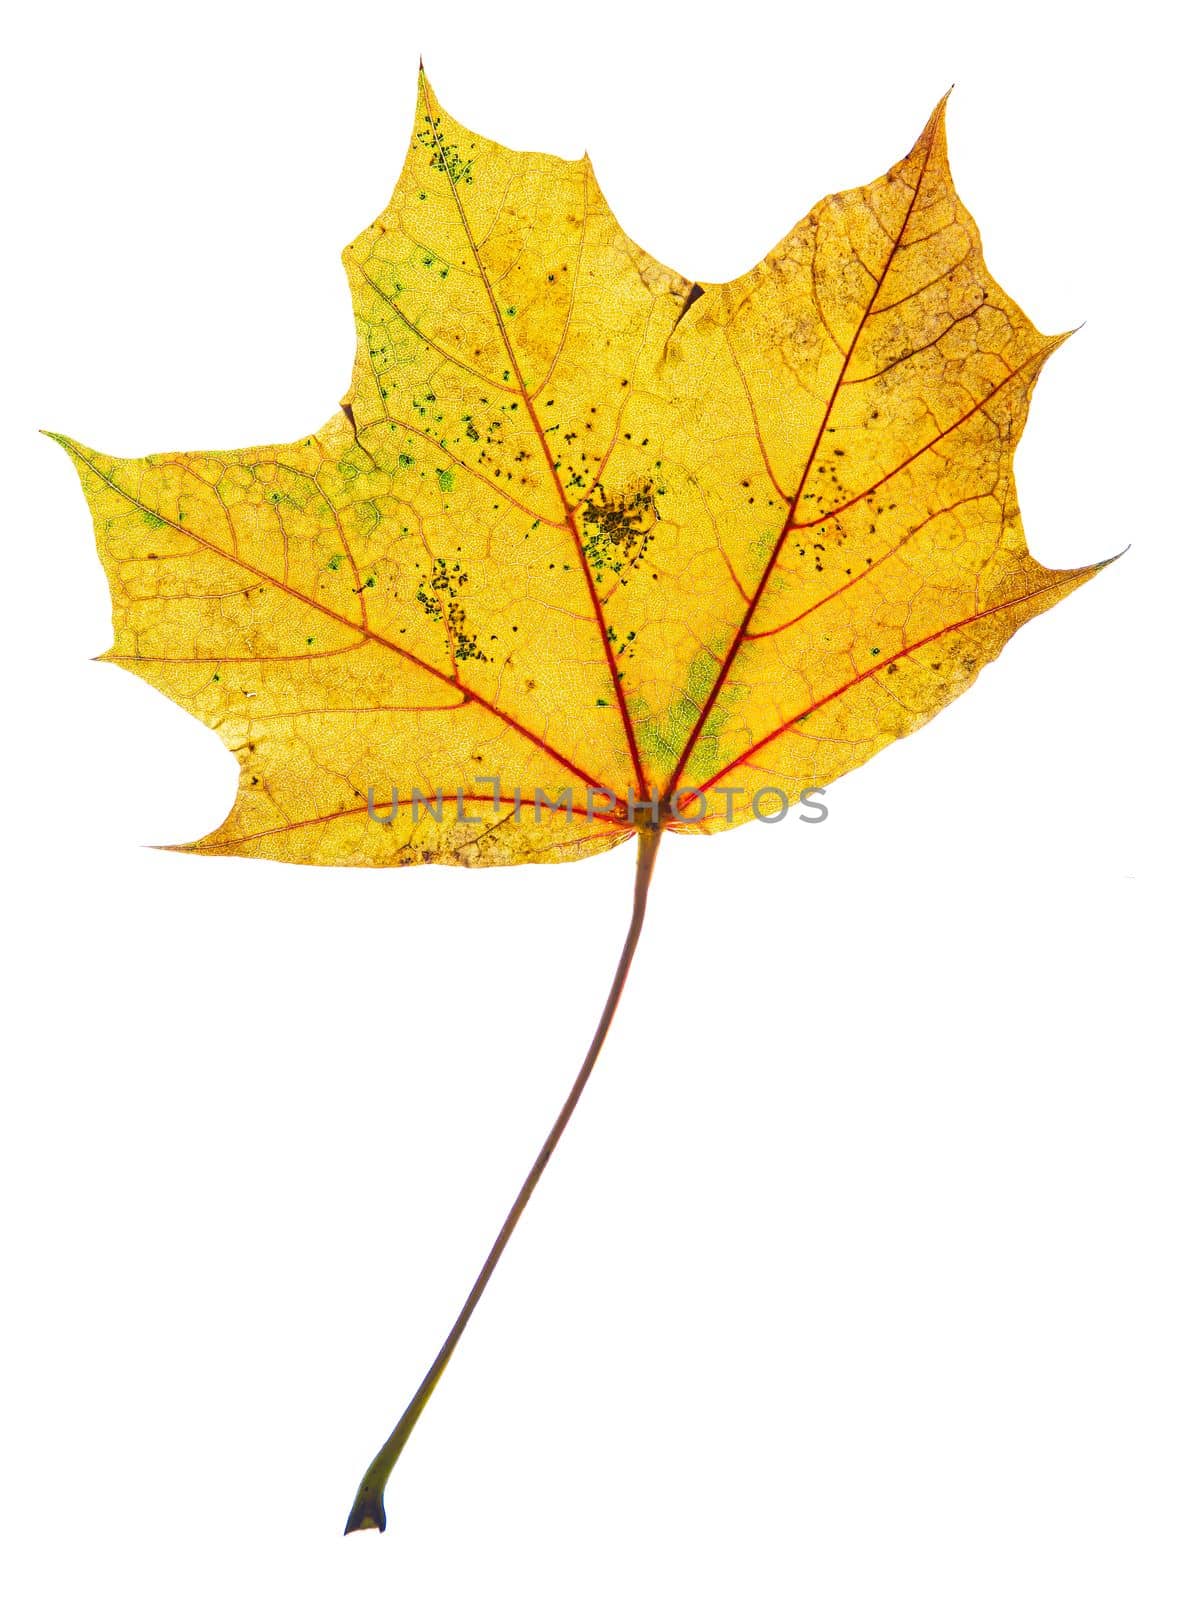 Yellow maple leaf by mypstudio